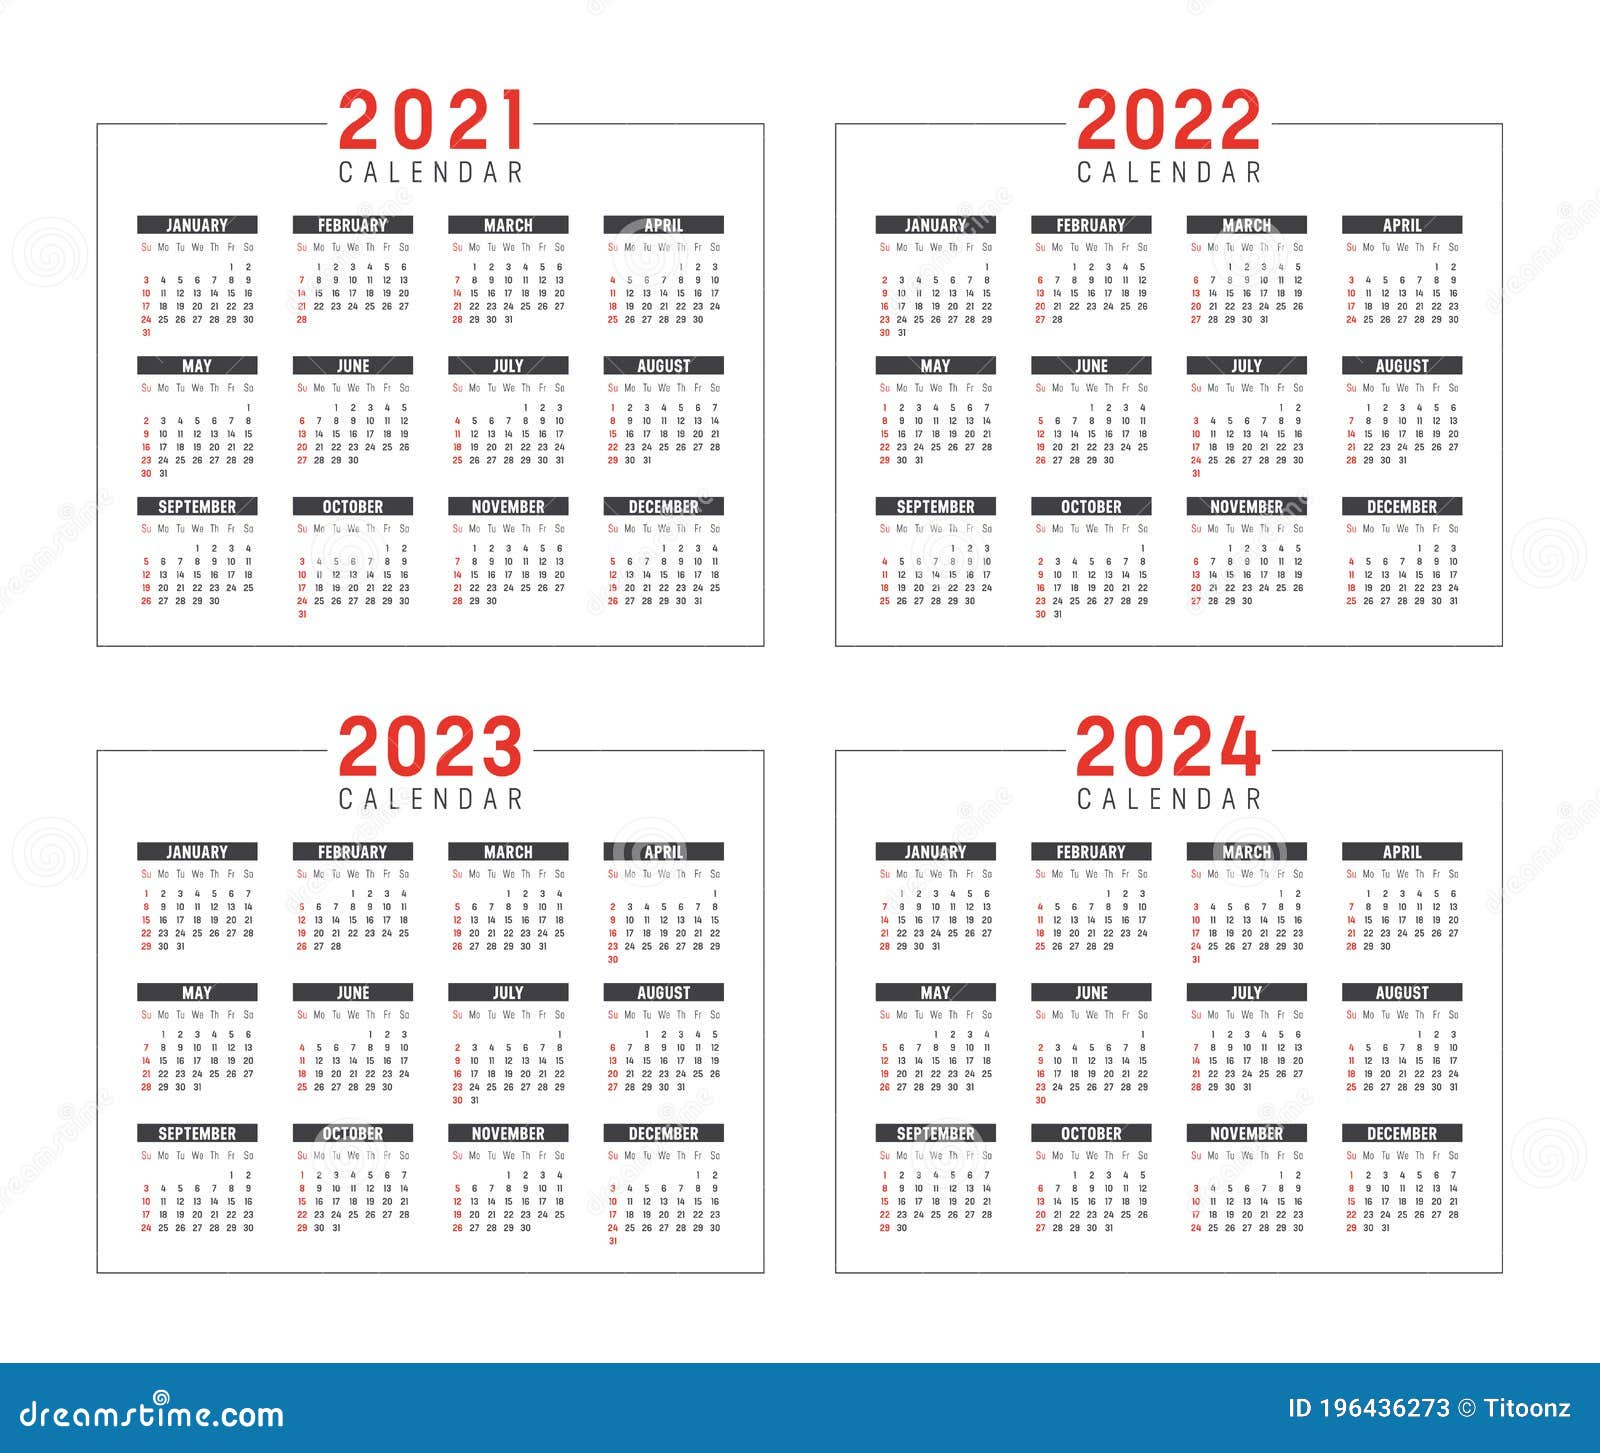 Календарь на 2024 год на телефон. Календарь 2019 2020 2021 2022 2023. Календарь 2020 2021 2022. Календарь 2019-2022. Календарь 2019 2020 2021 года.